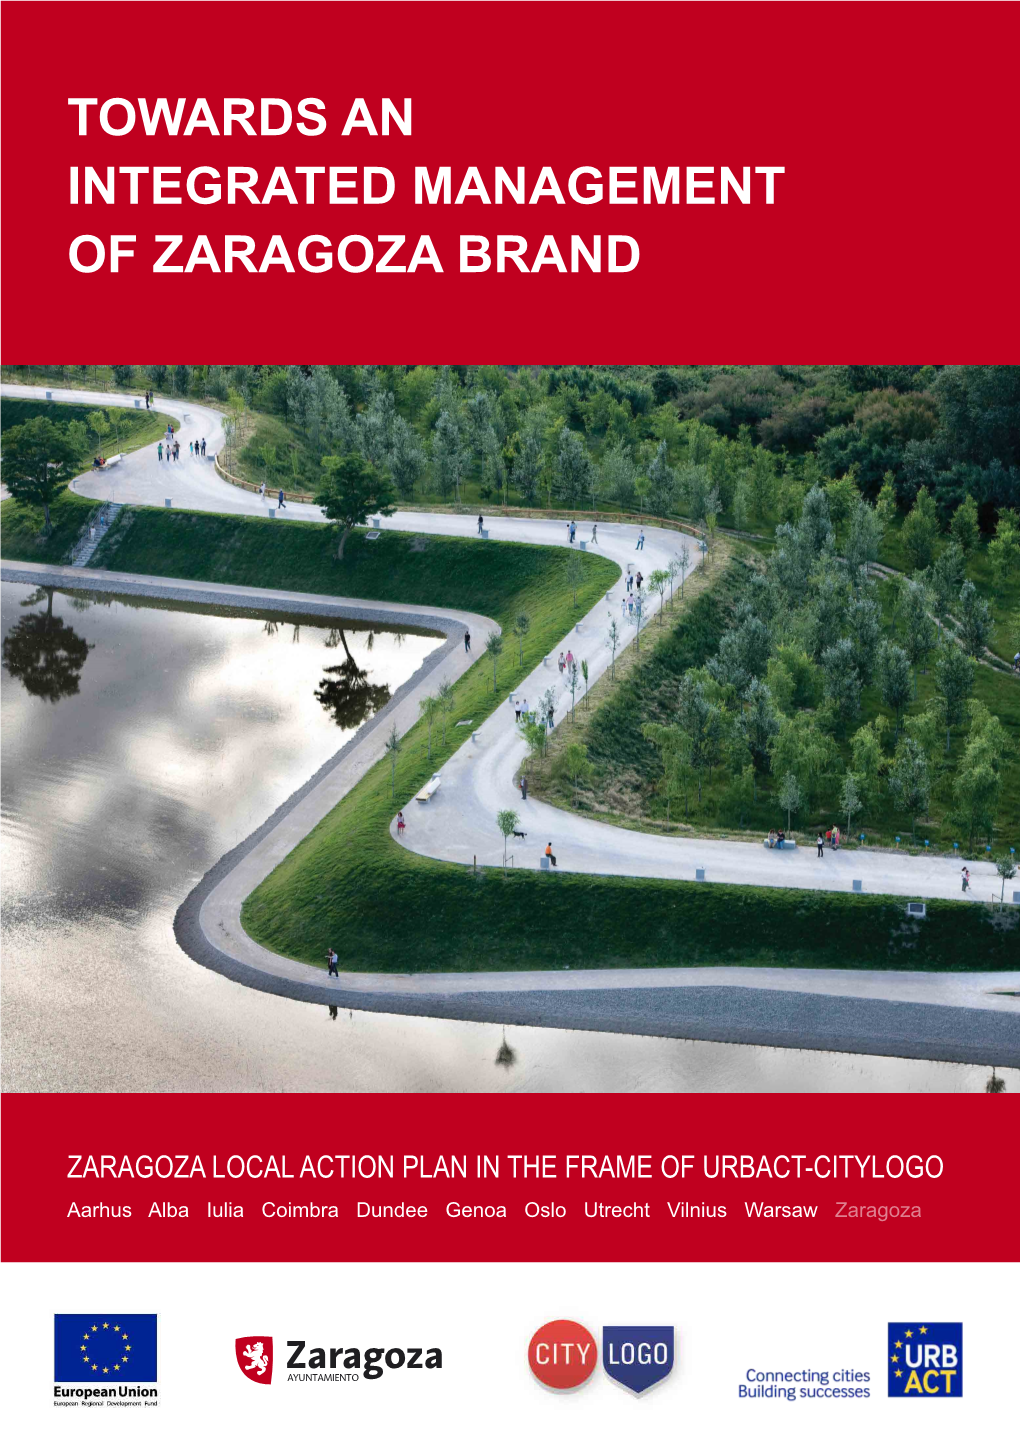 Towards an Integrated Management of Zaragoza Brand